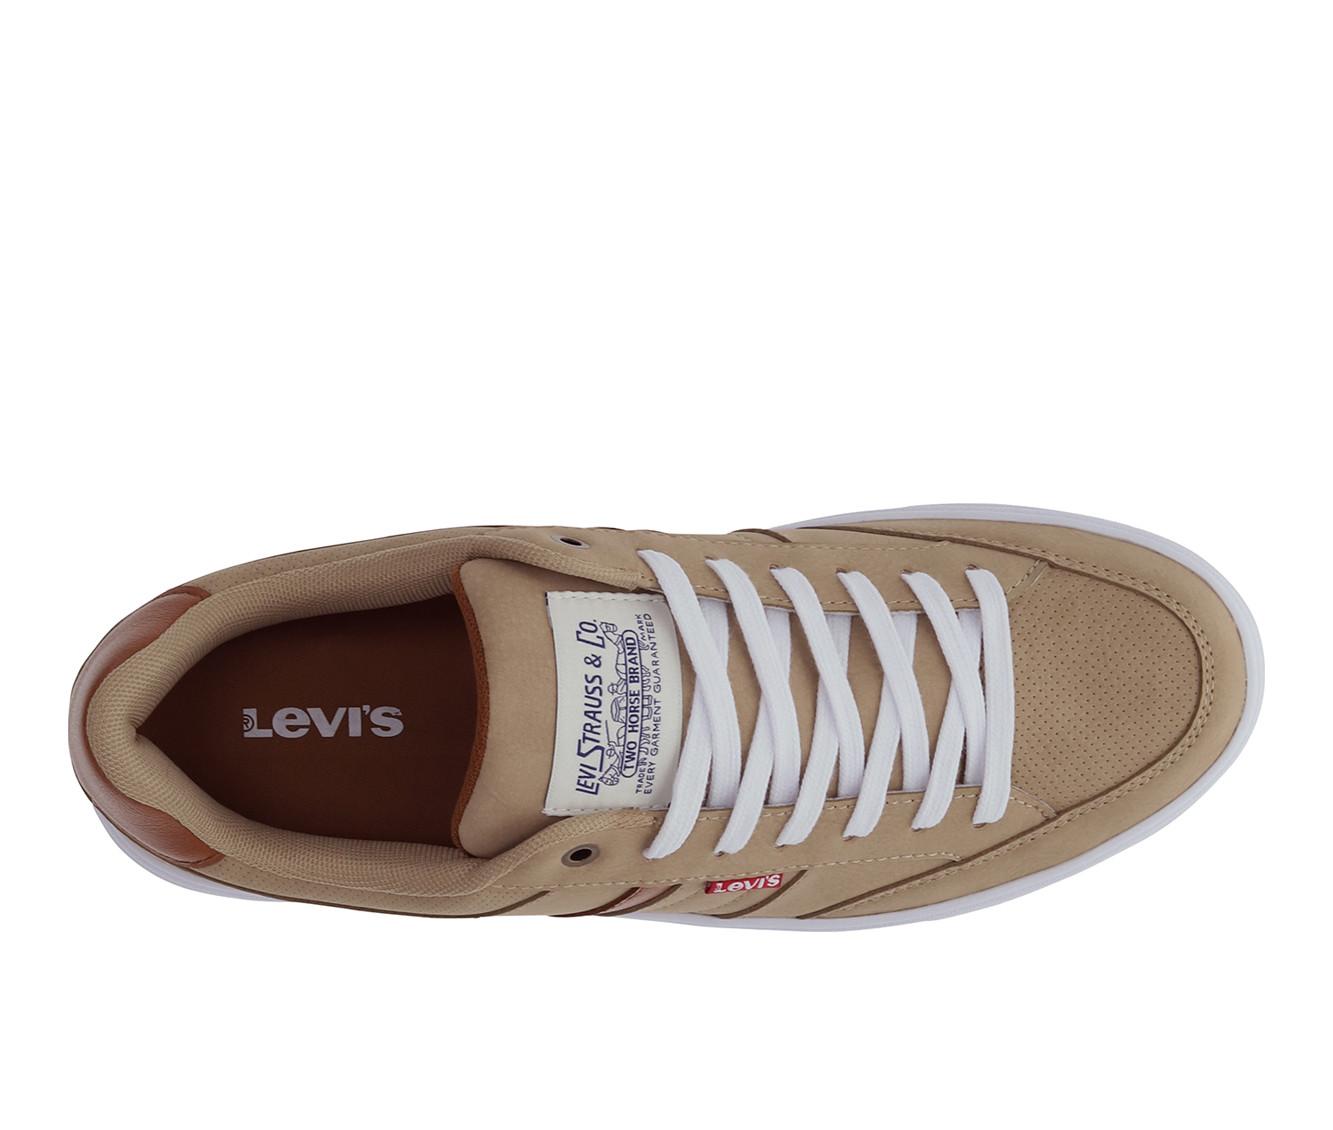 Men's Levis Gavin Casual Sneakers